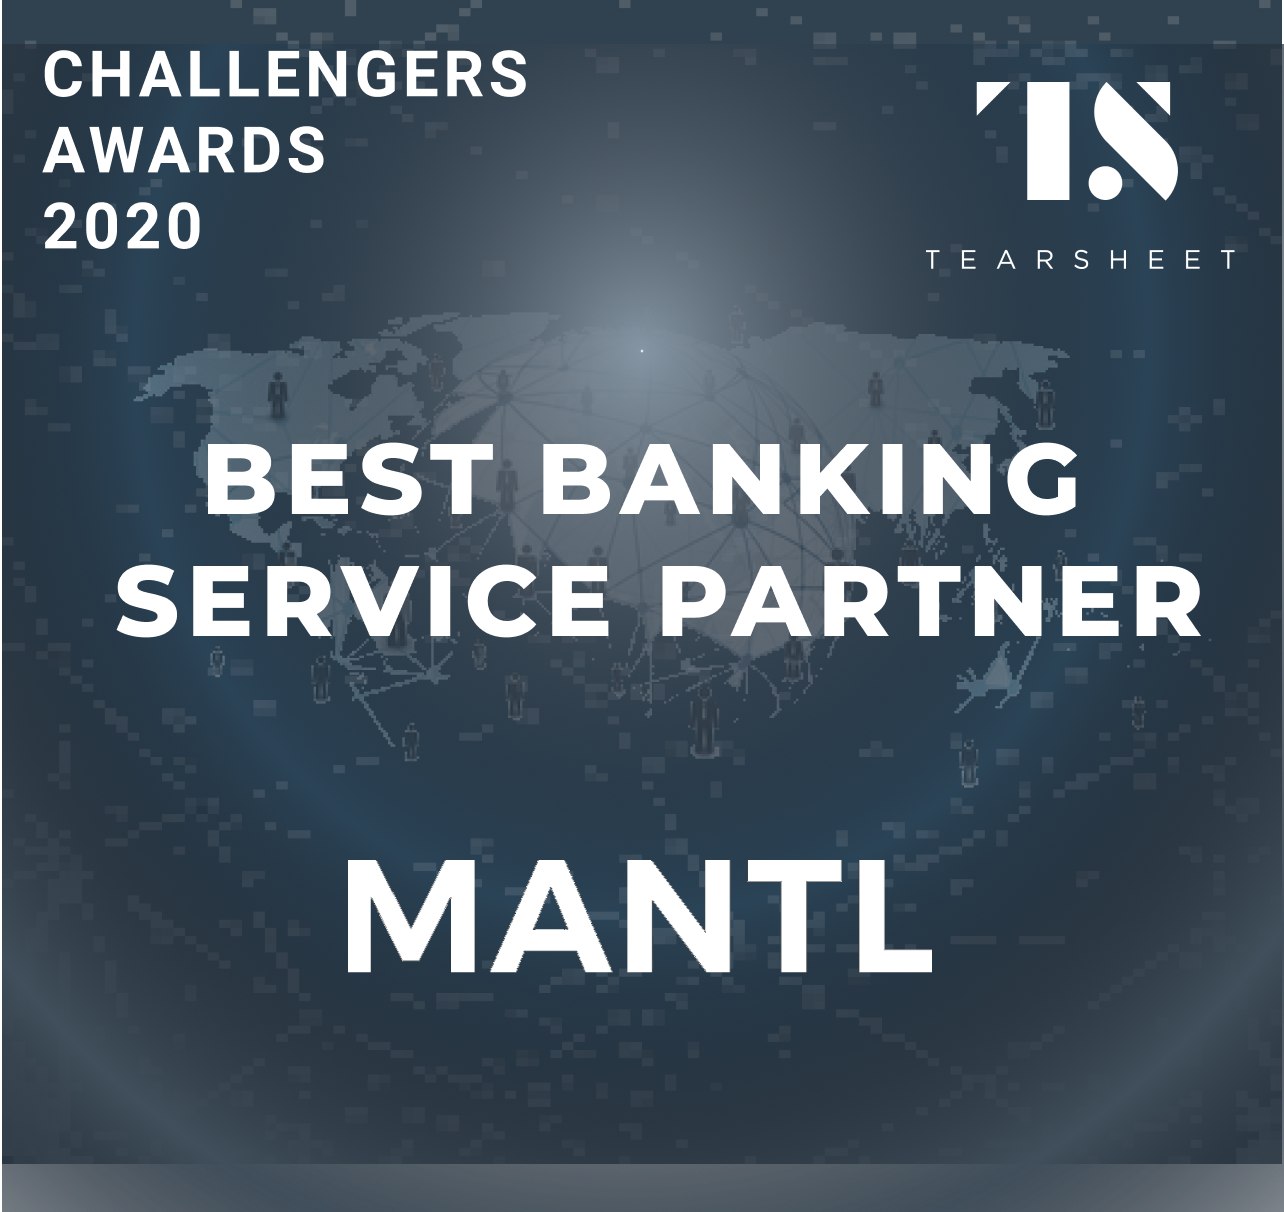 MANTL best banking service partner tearsheet's banking service partner award